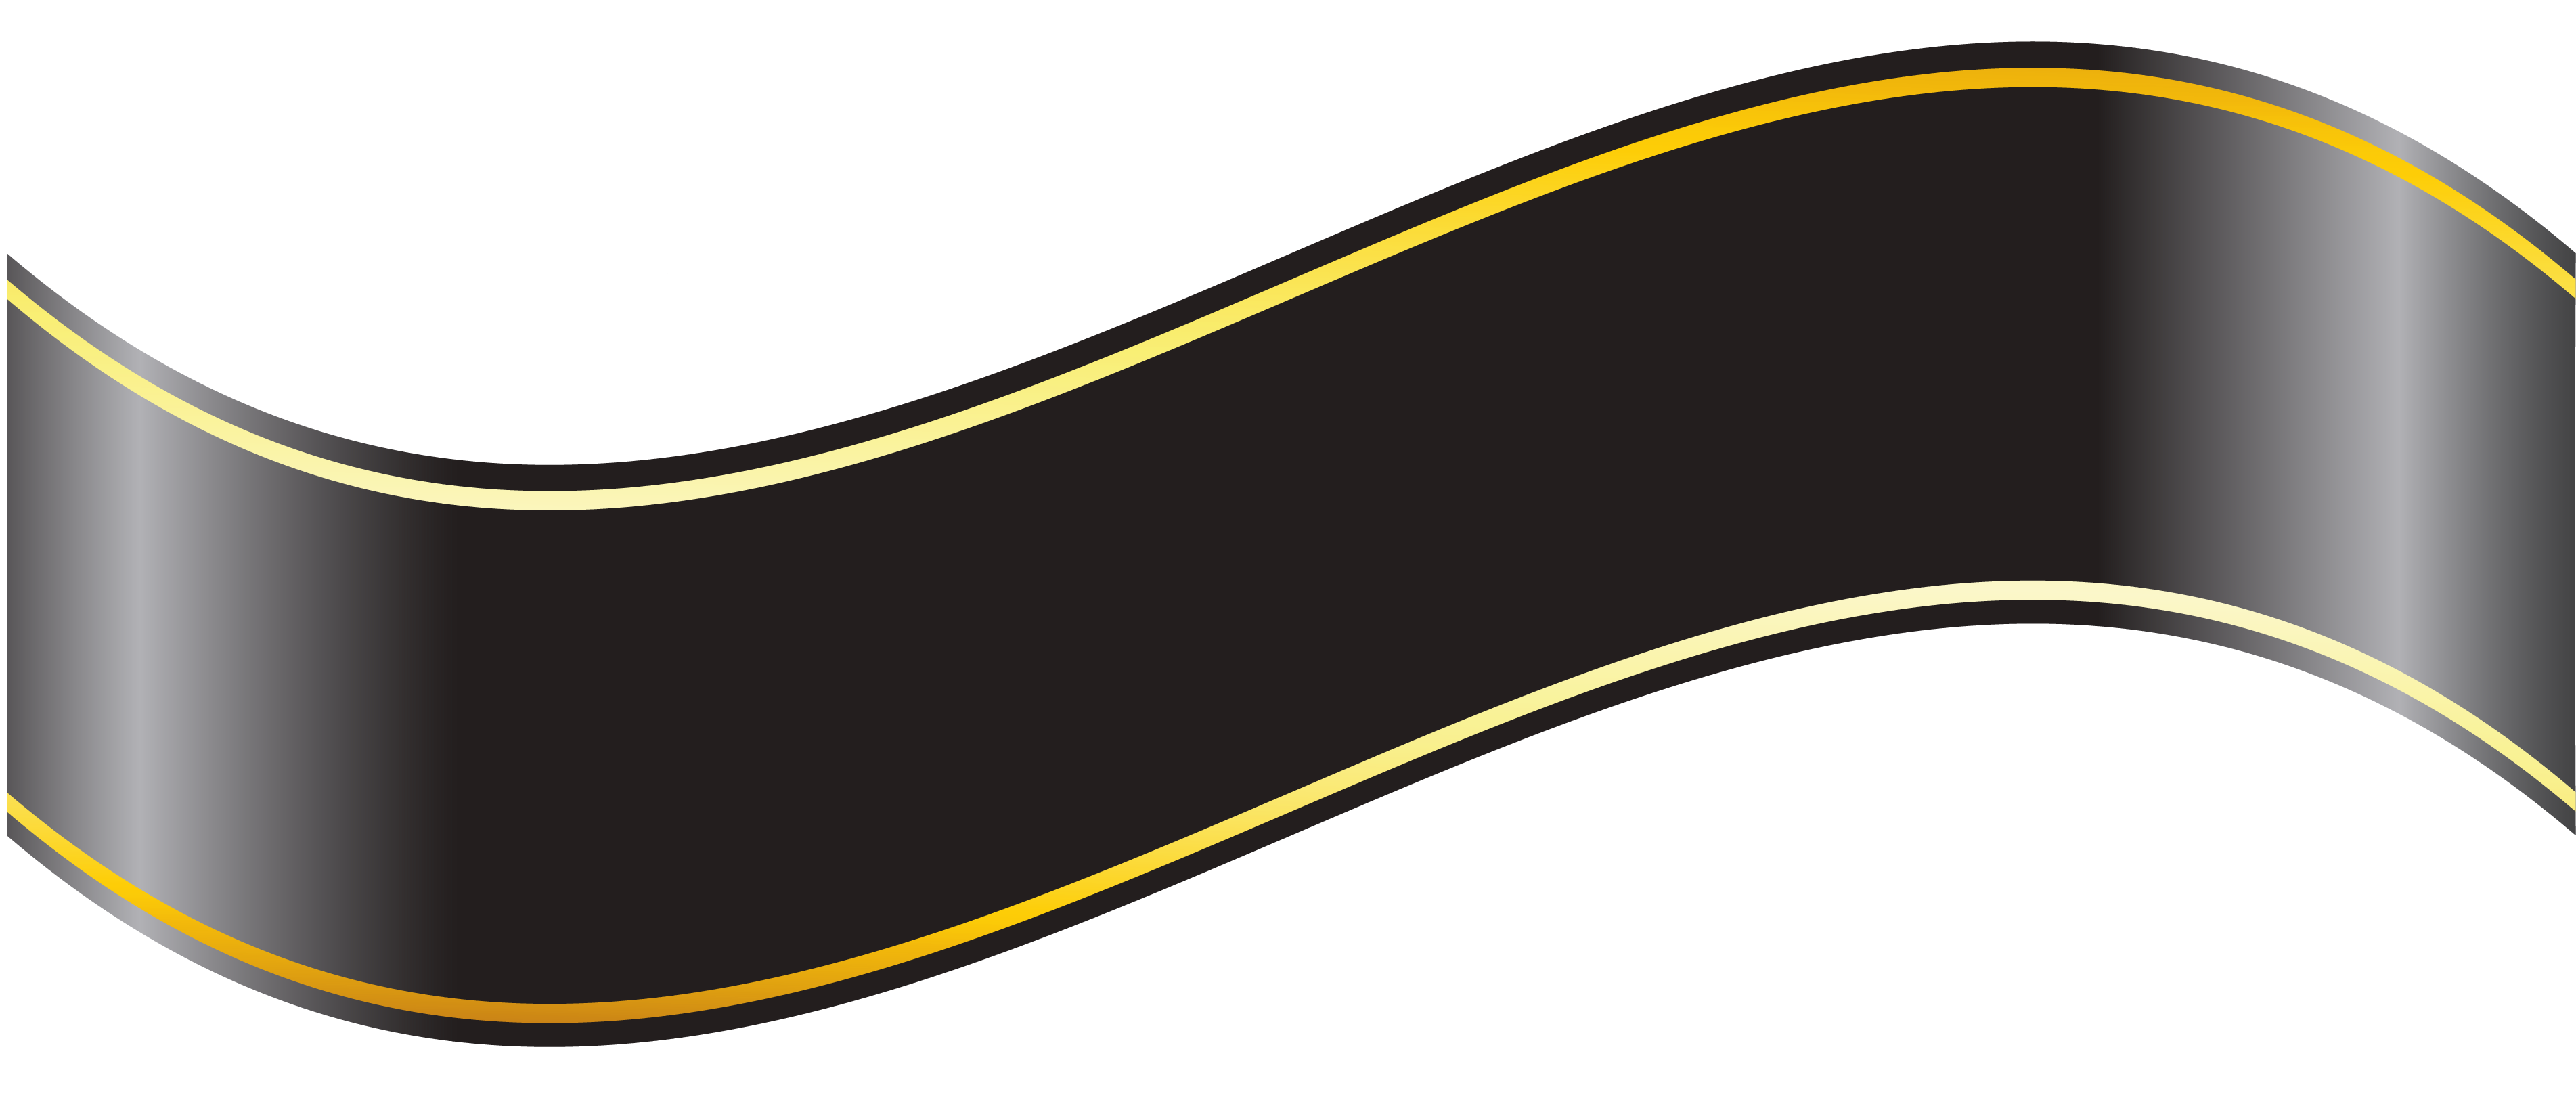 black banner clipart